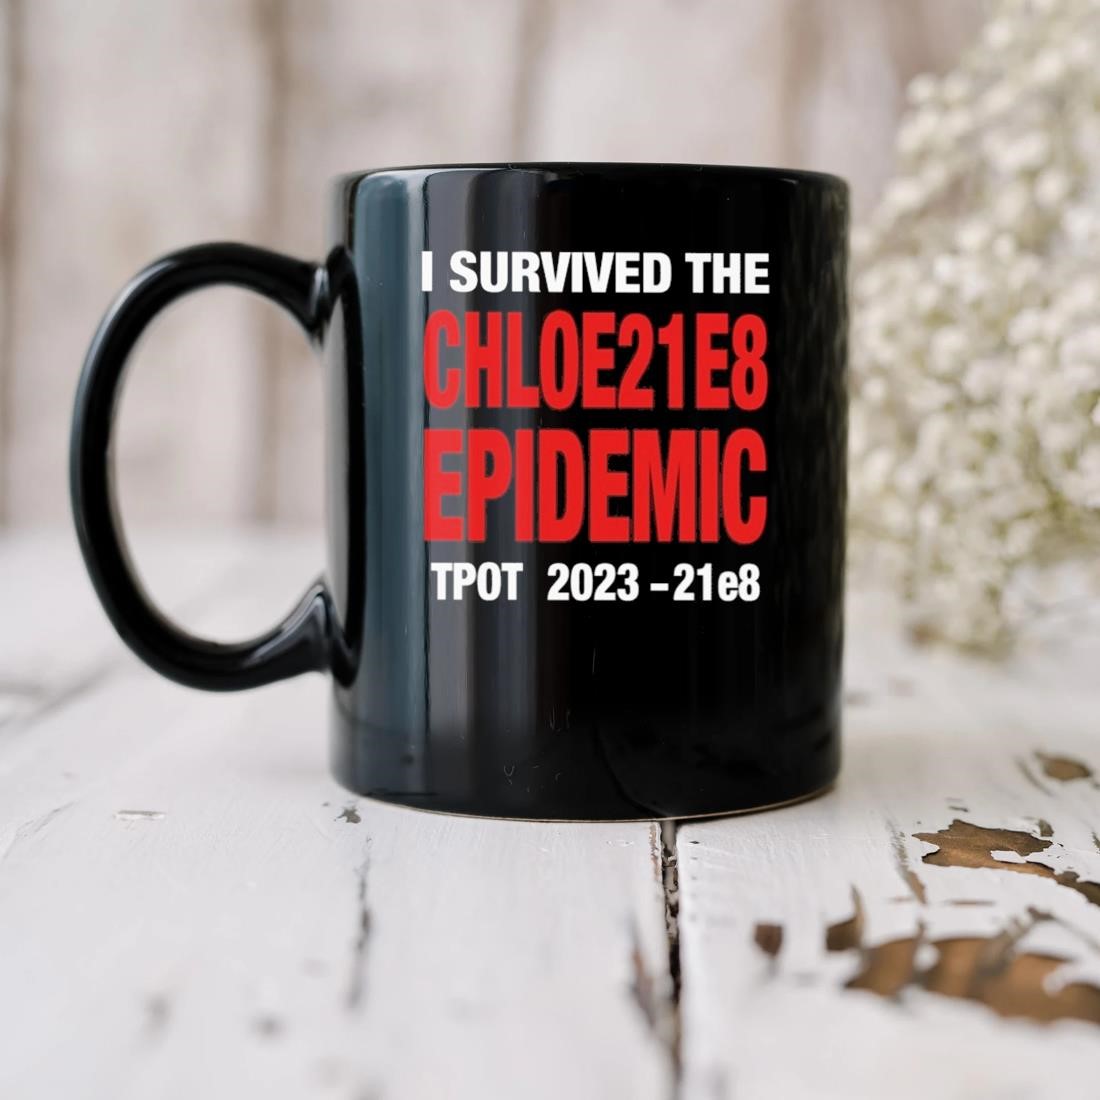 I Survived The Chloe21e8 Epidemic Tpot 2023 Mug biu.jpg